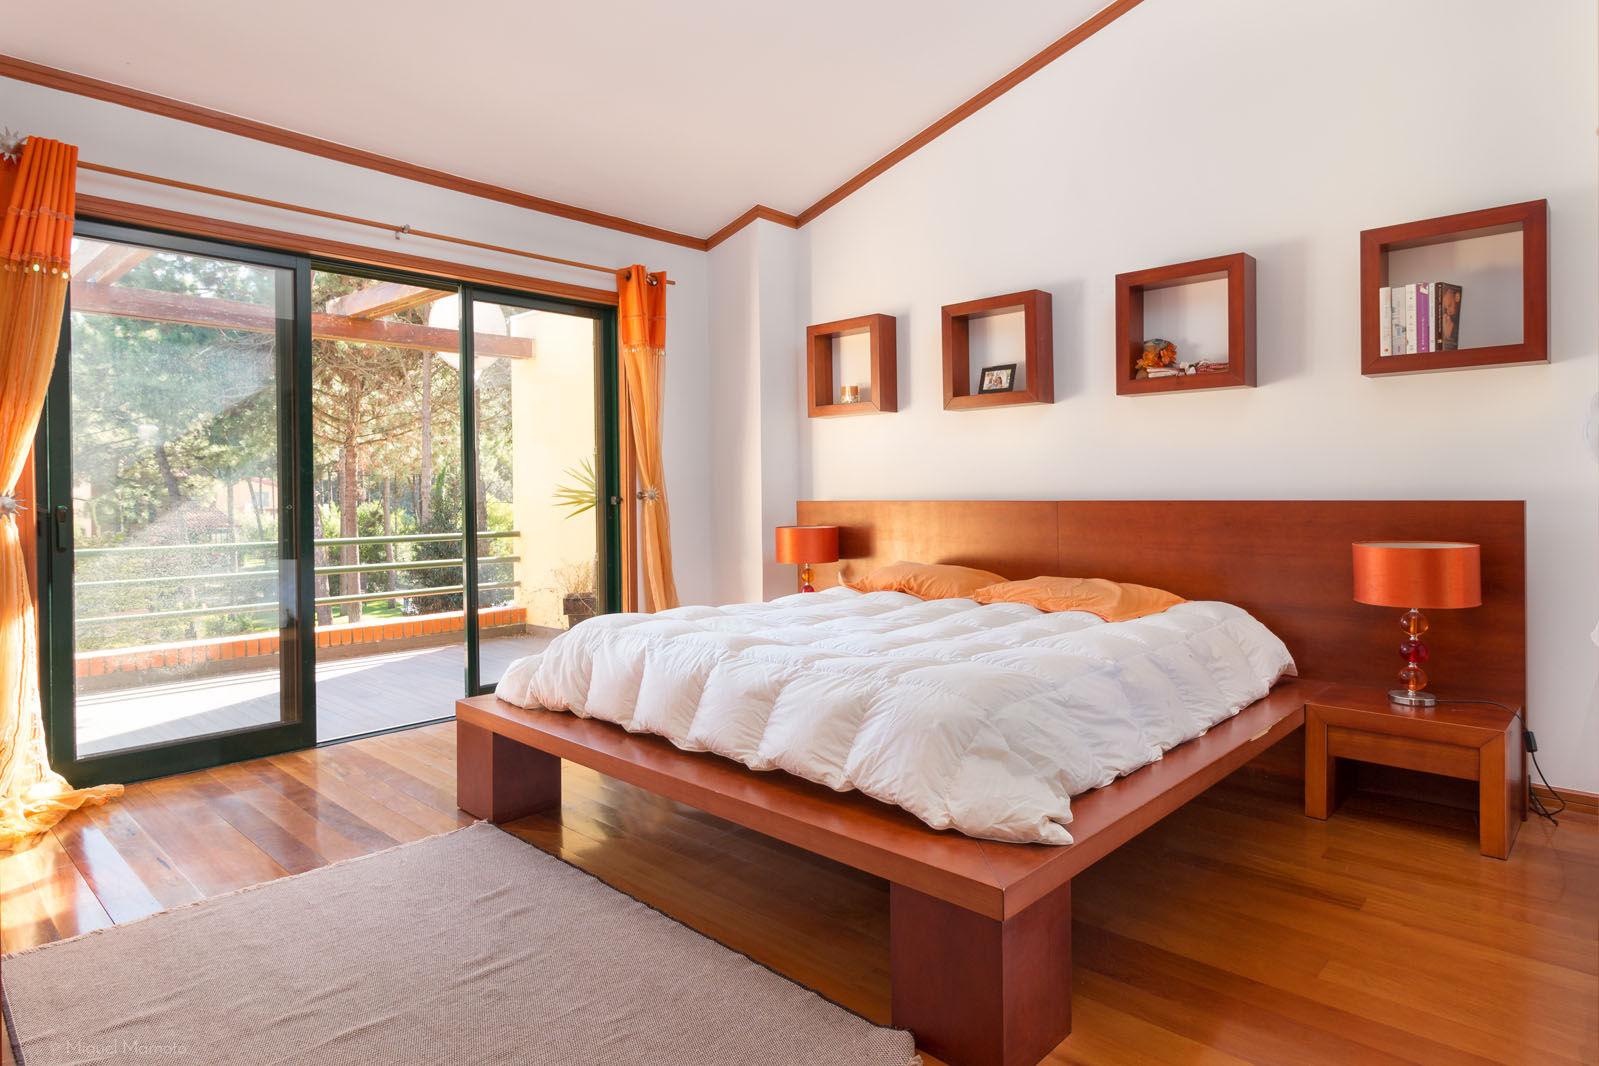 Moradia Mira Villas, Miguel Marnoto - Fotografia Miguel Marnoto - Fotografia Modern style bedroom